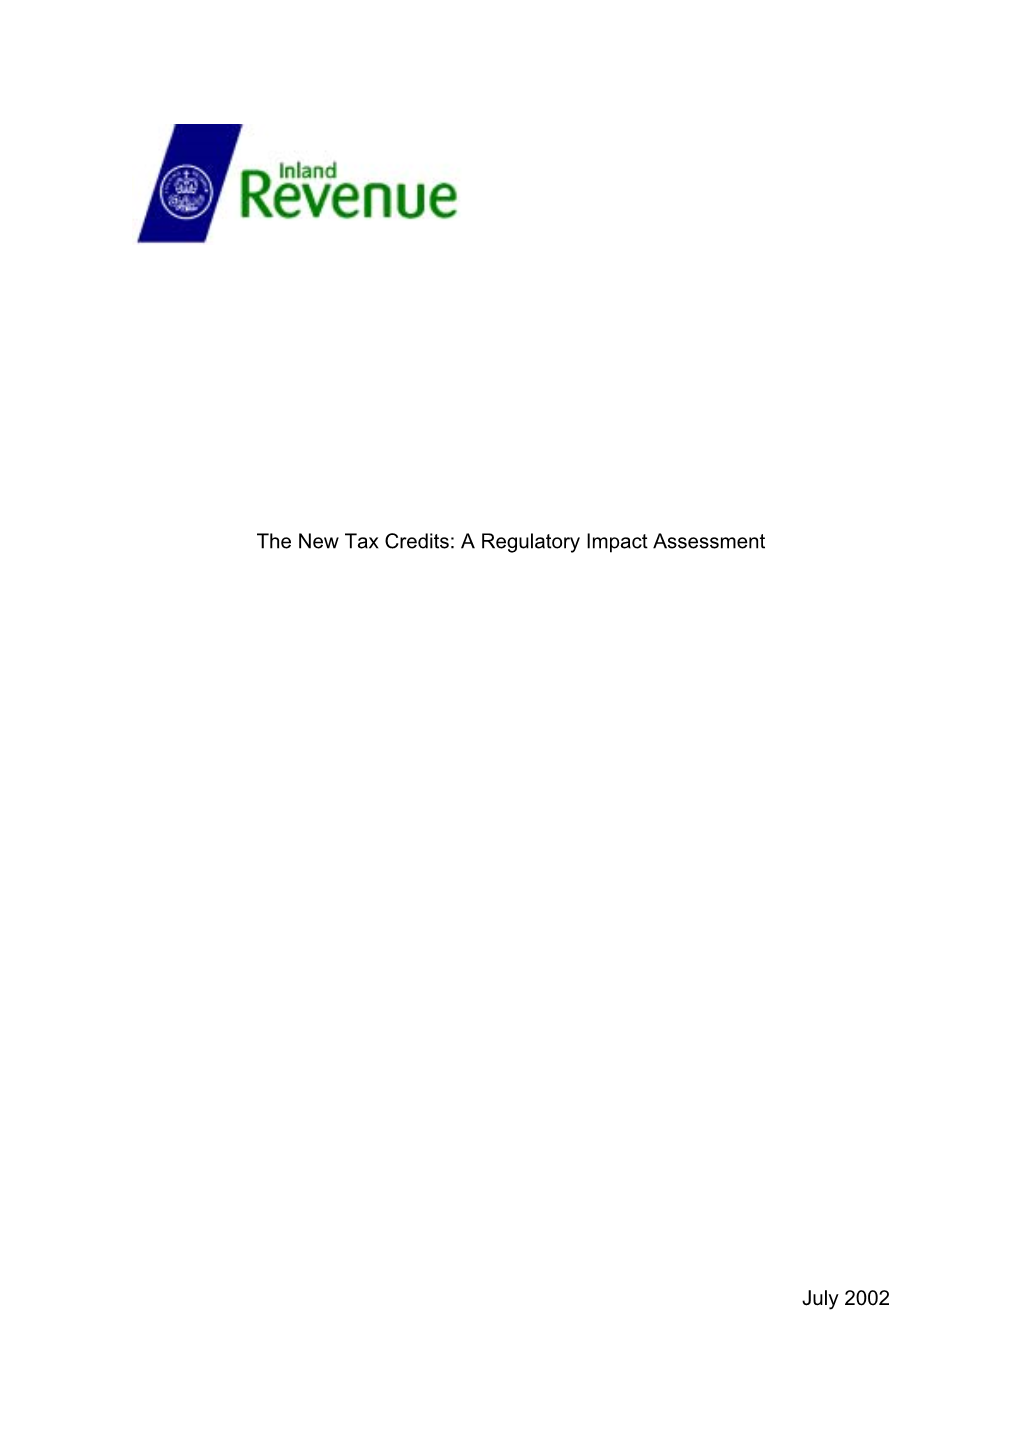 The New Tax Credits: a Regulatory Impact Assessment